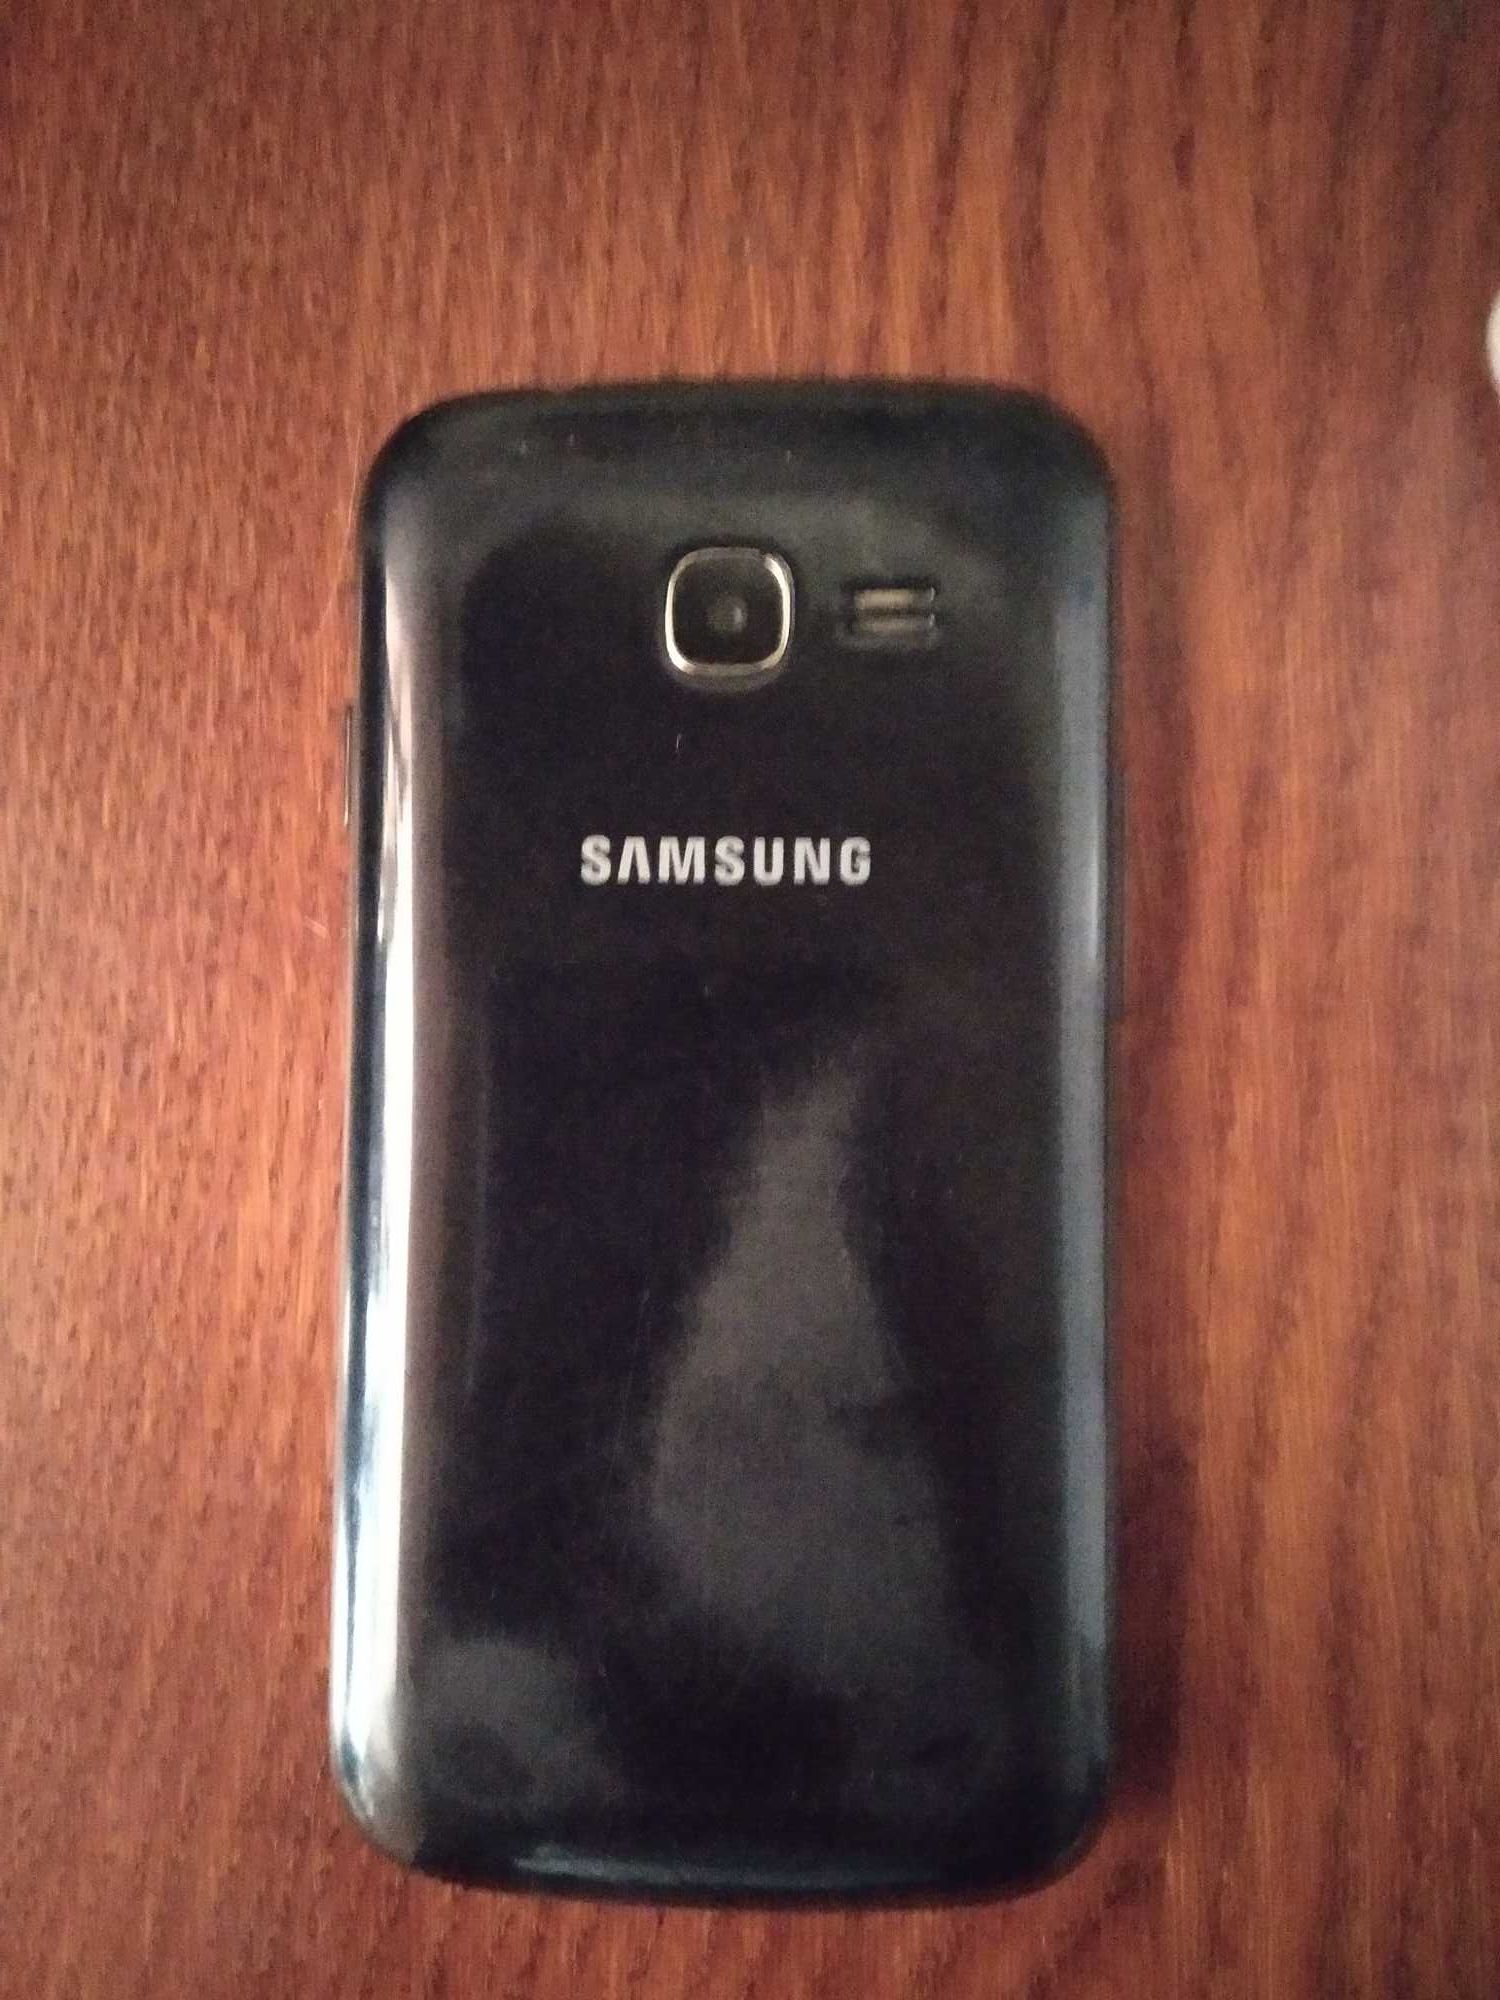 Samsung Galaxy Star Plus Duos S7262 Black